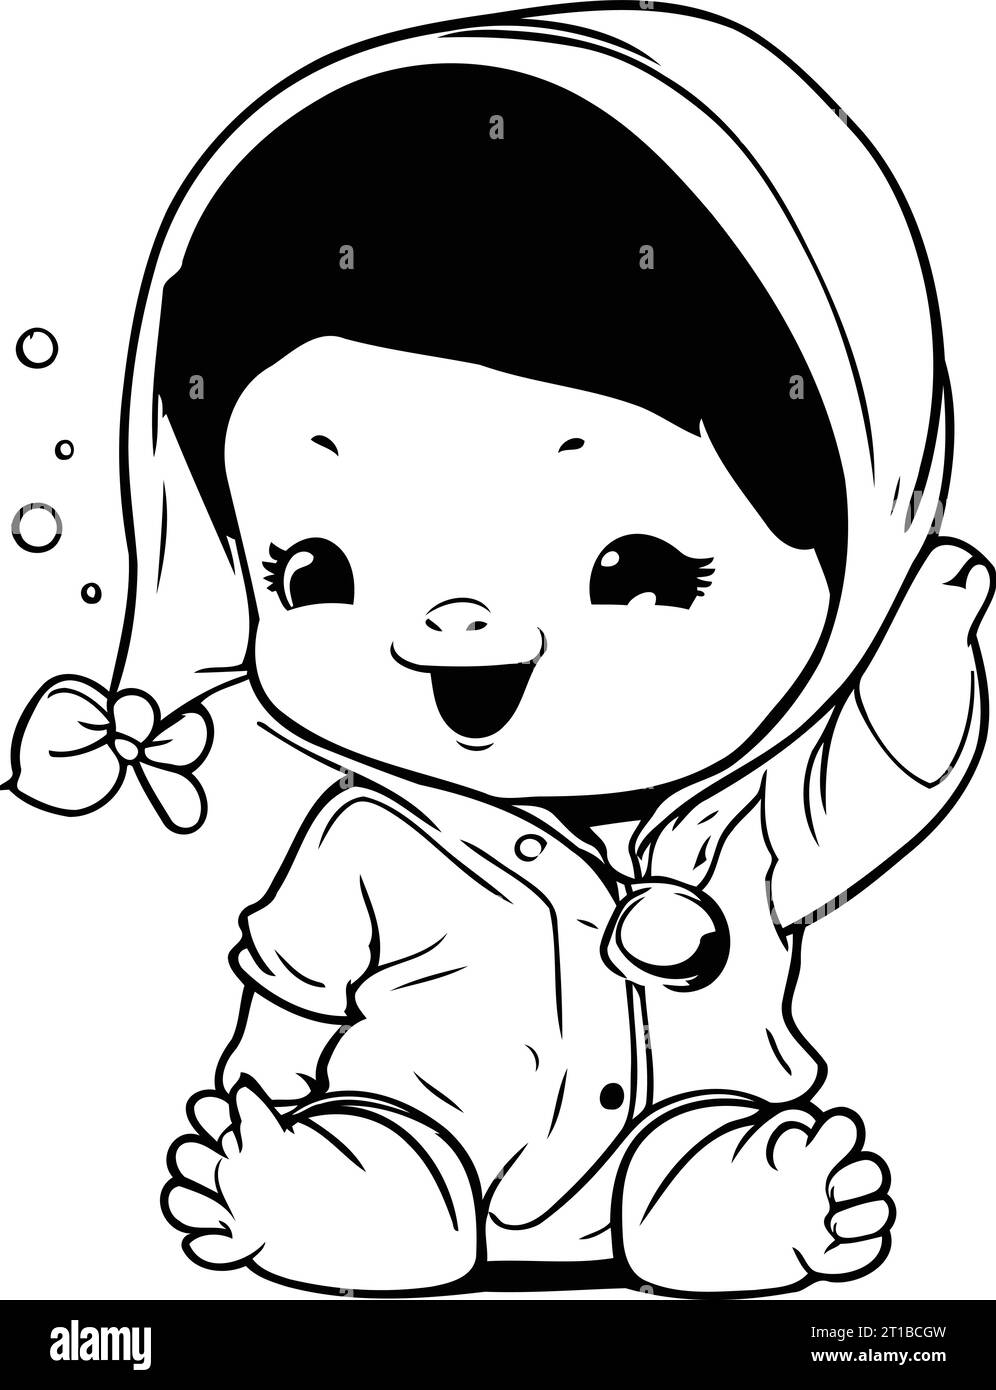 Cute Cartoon Girl In A Bathrobe Vector Illustration Isolated On White Background Stock Vector 